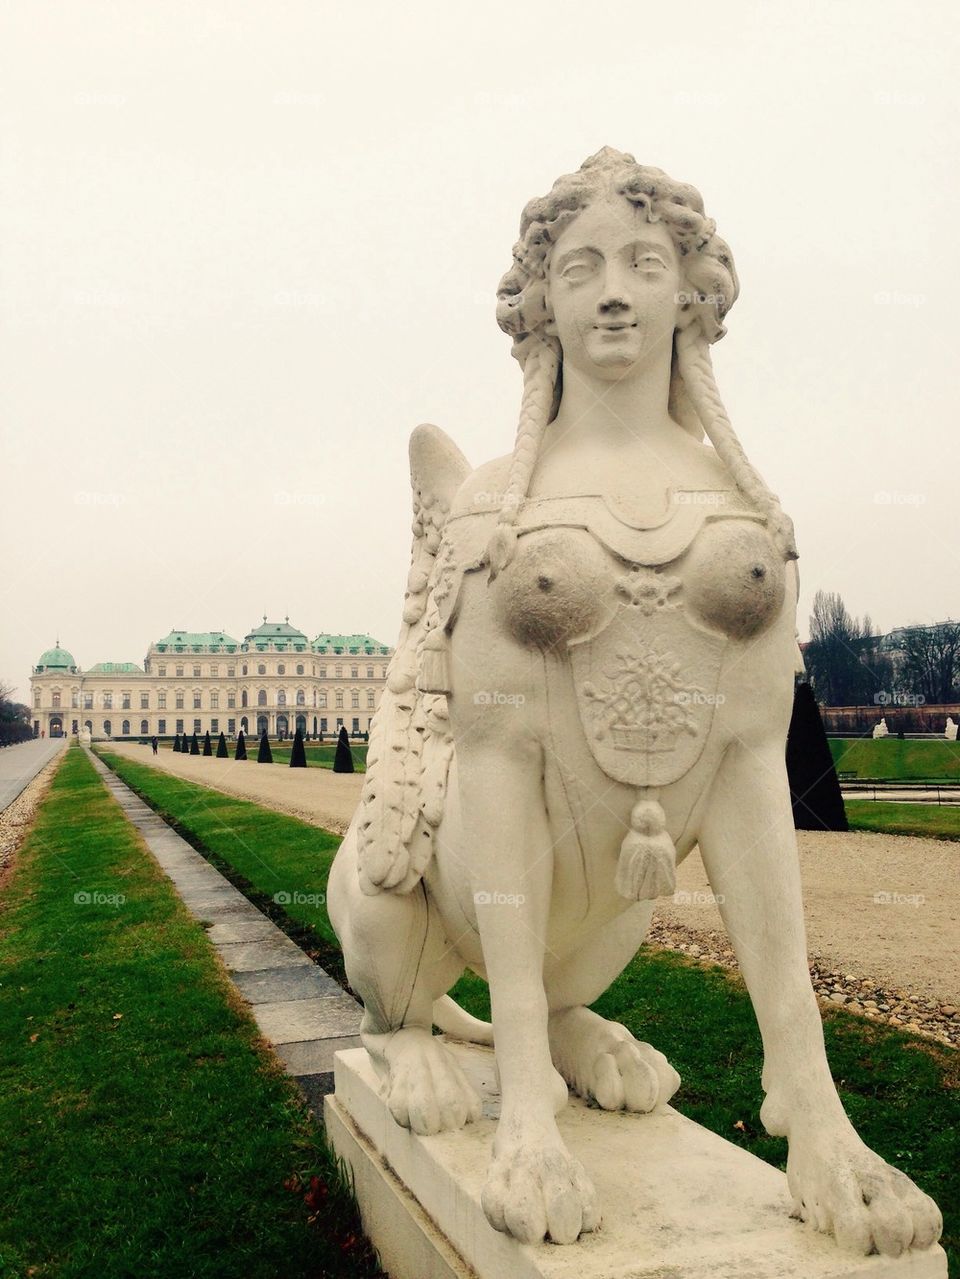 sculpture in belvedere palace garden